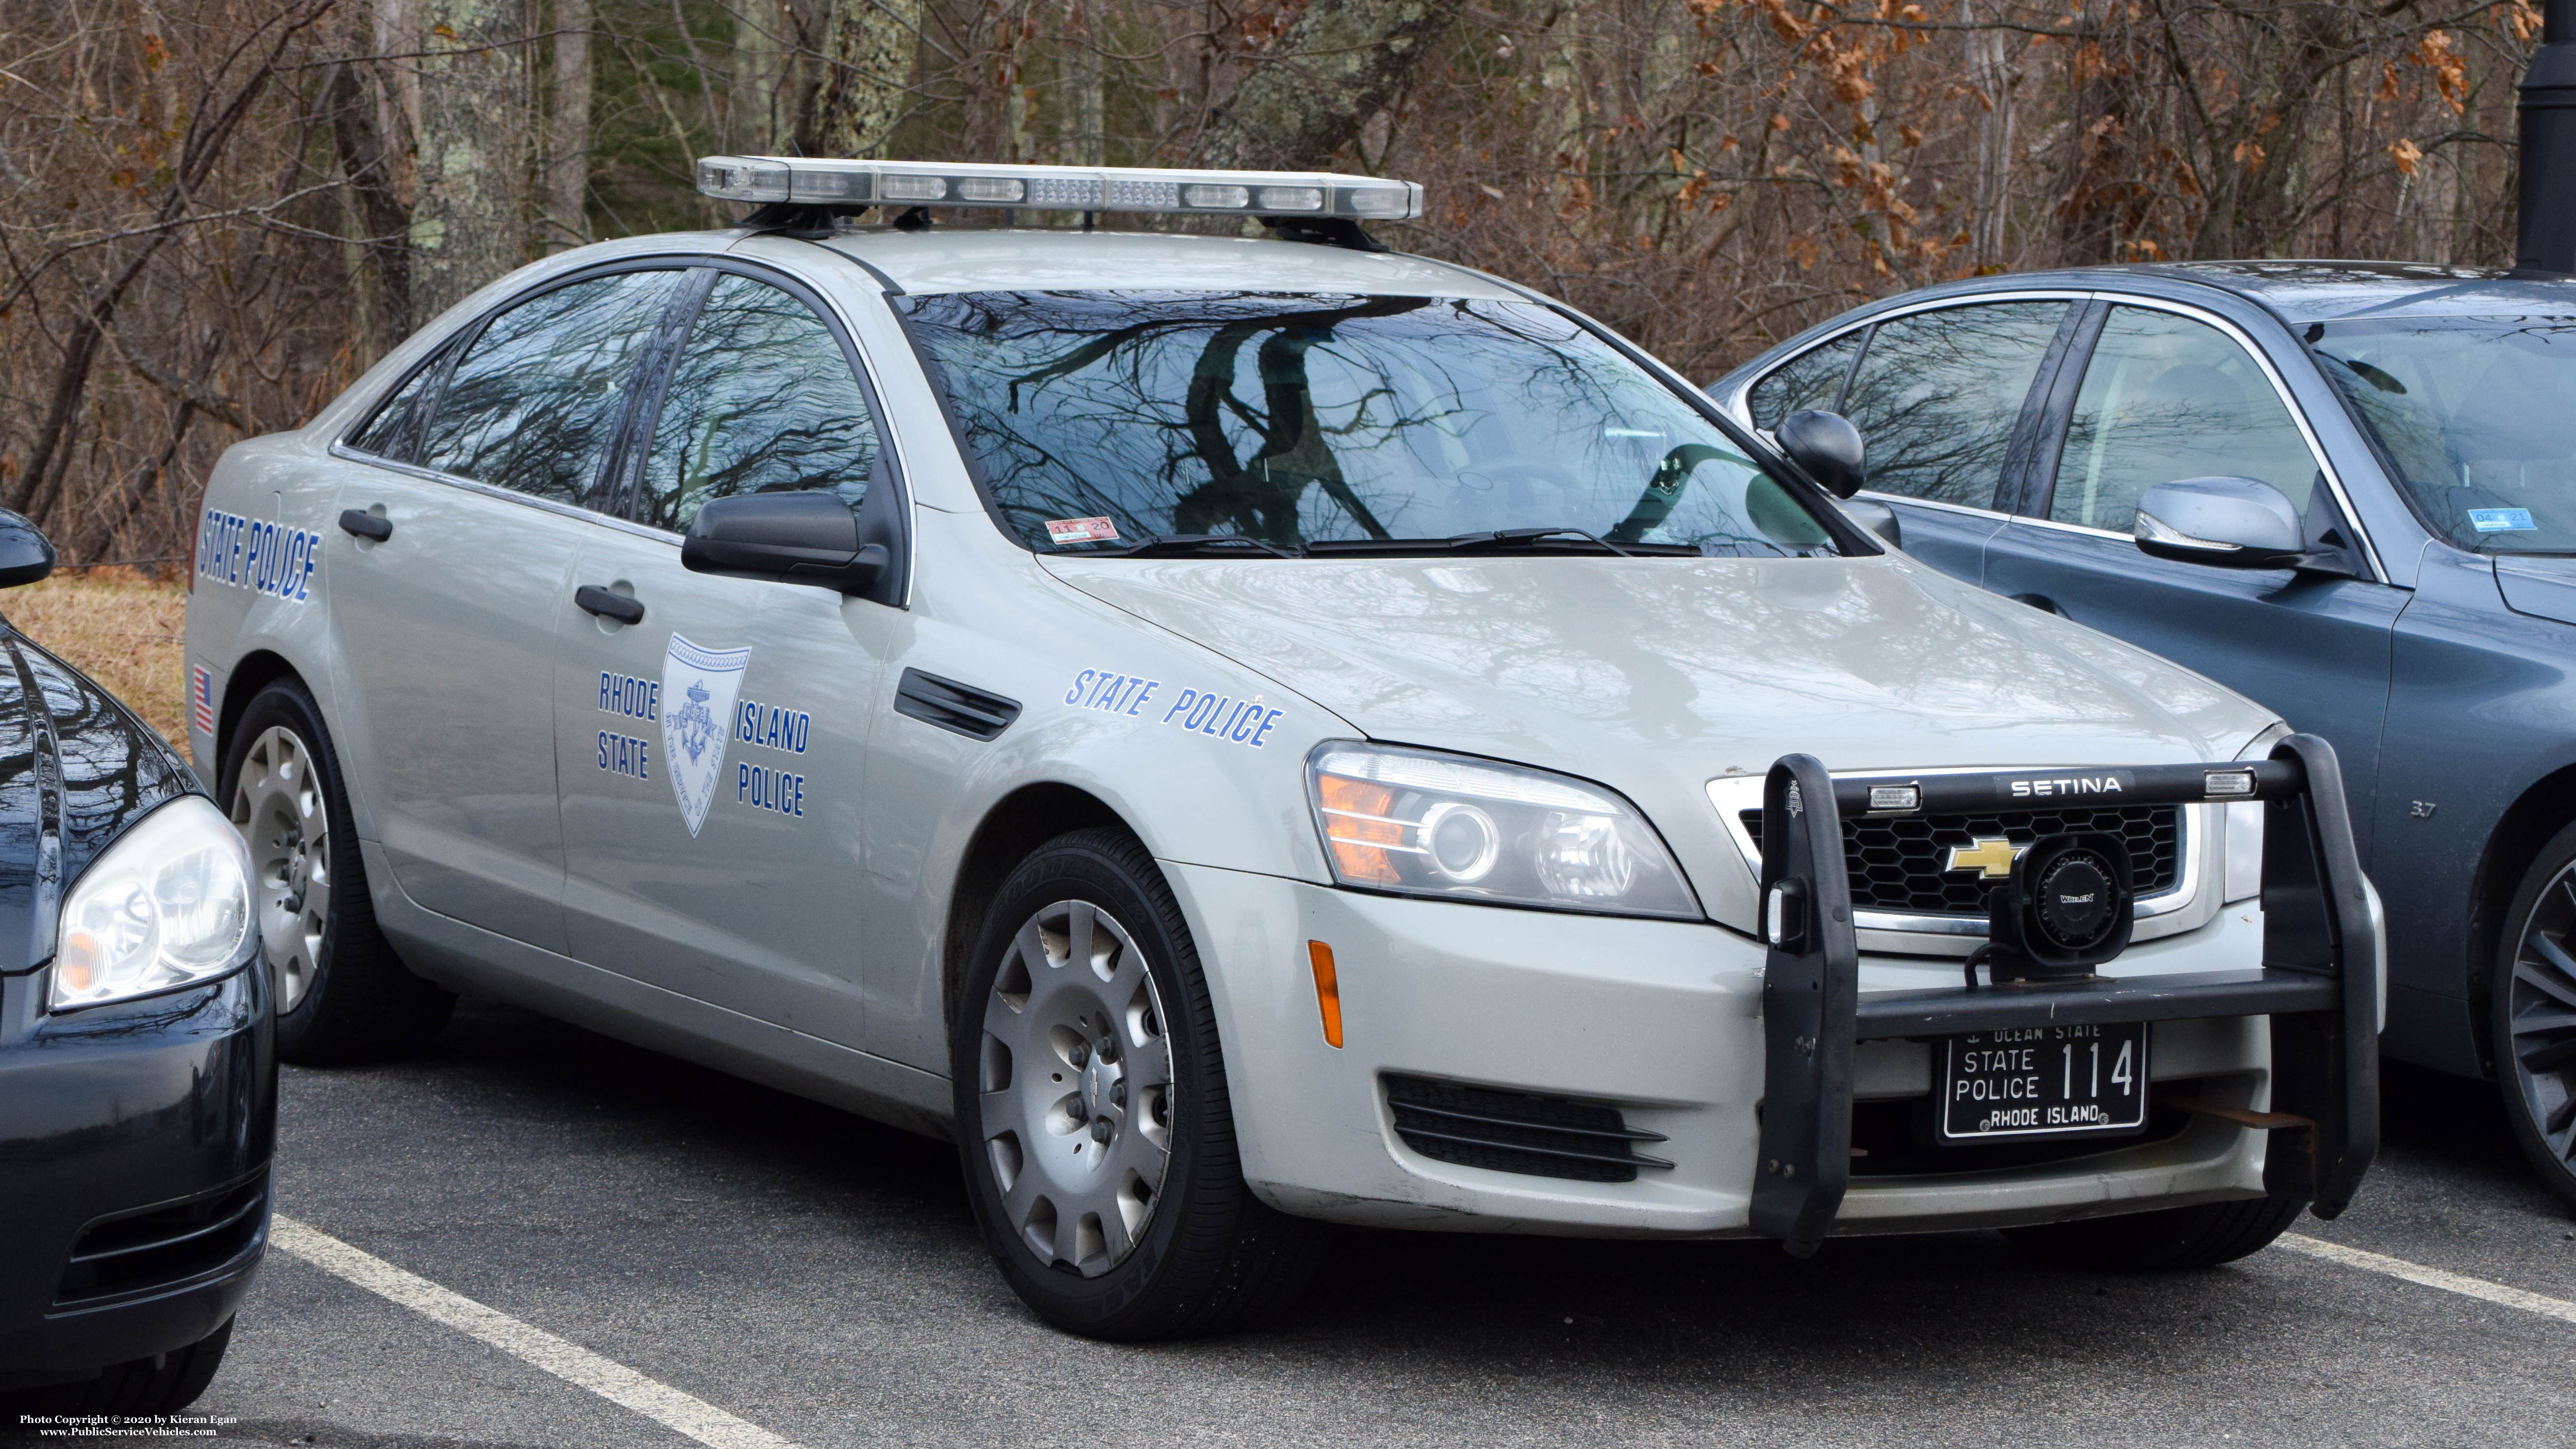 A photo  of Rhode Island State Police
            Cruiser 114, a 2013 Chevrolet Caprice             taken by Kieran Egan